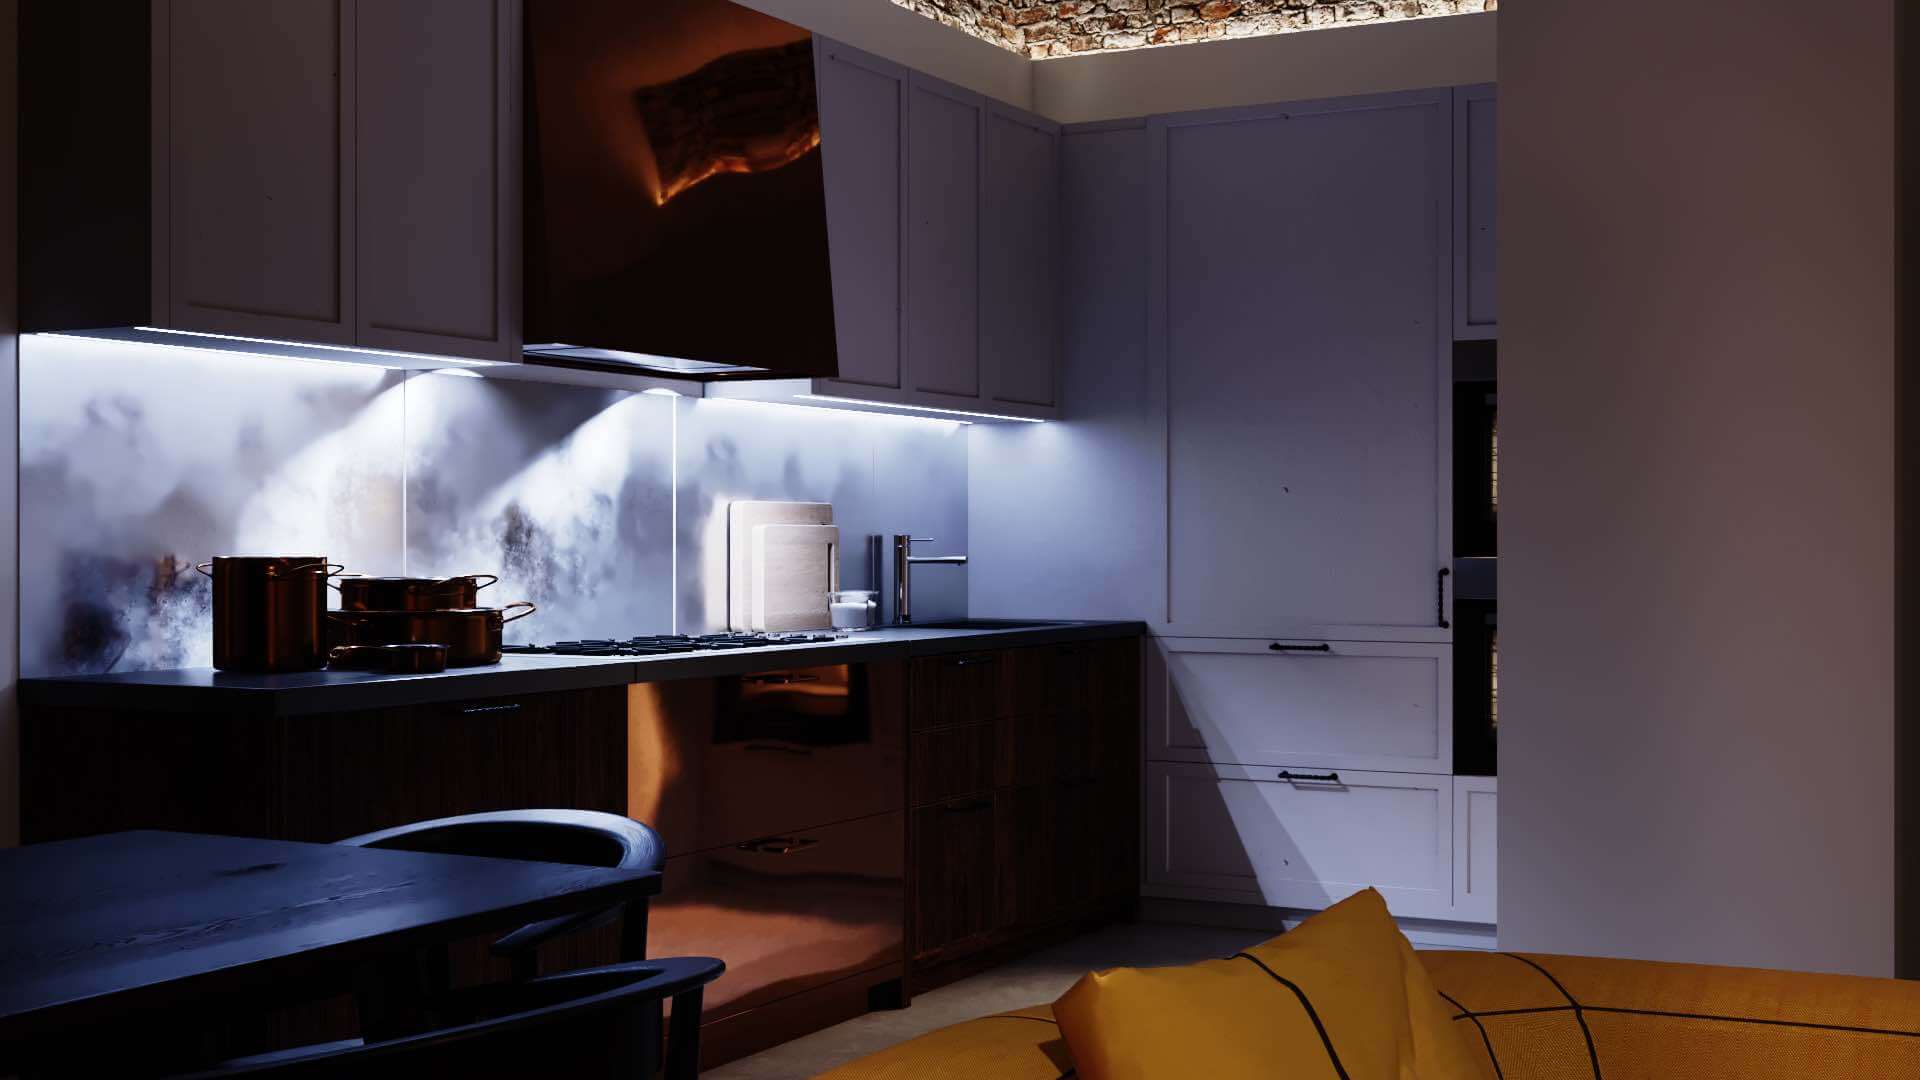 Oasis Apartment kitchen modern wood - cgi visualization